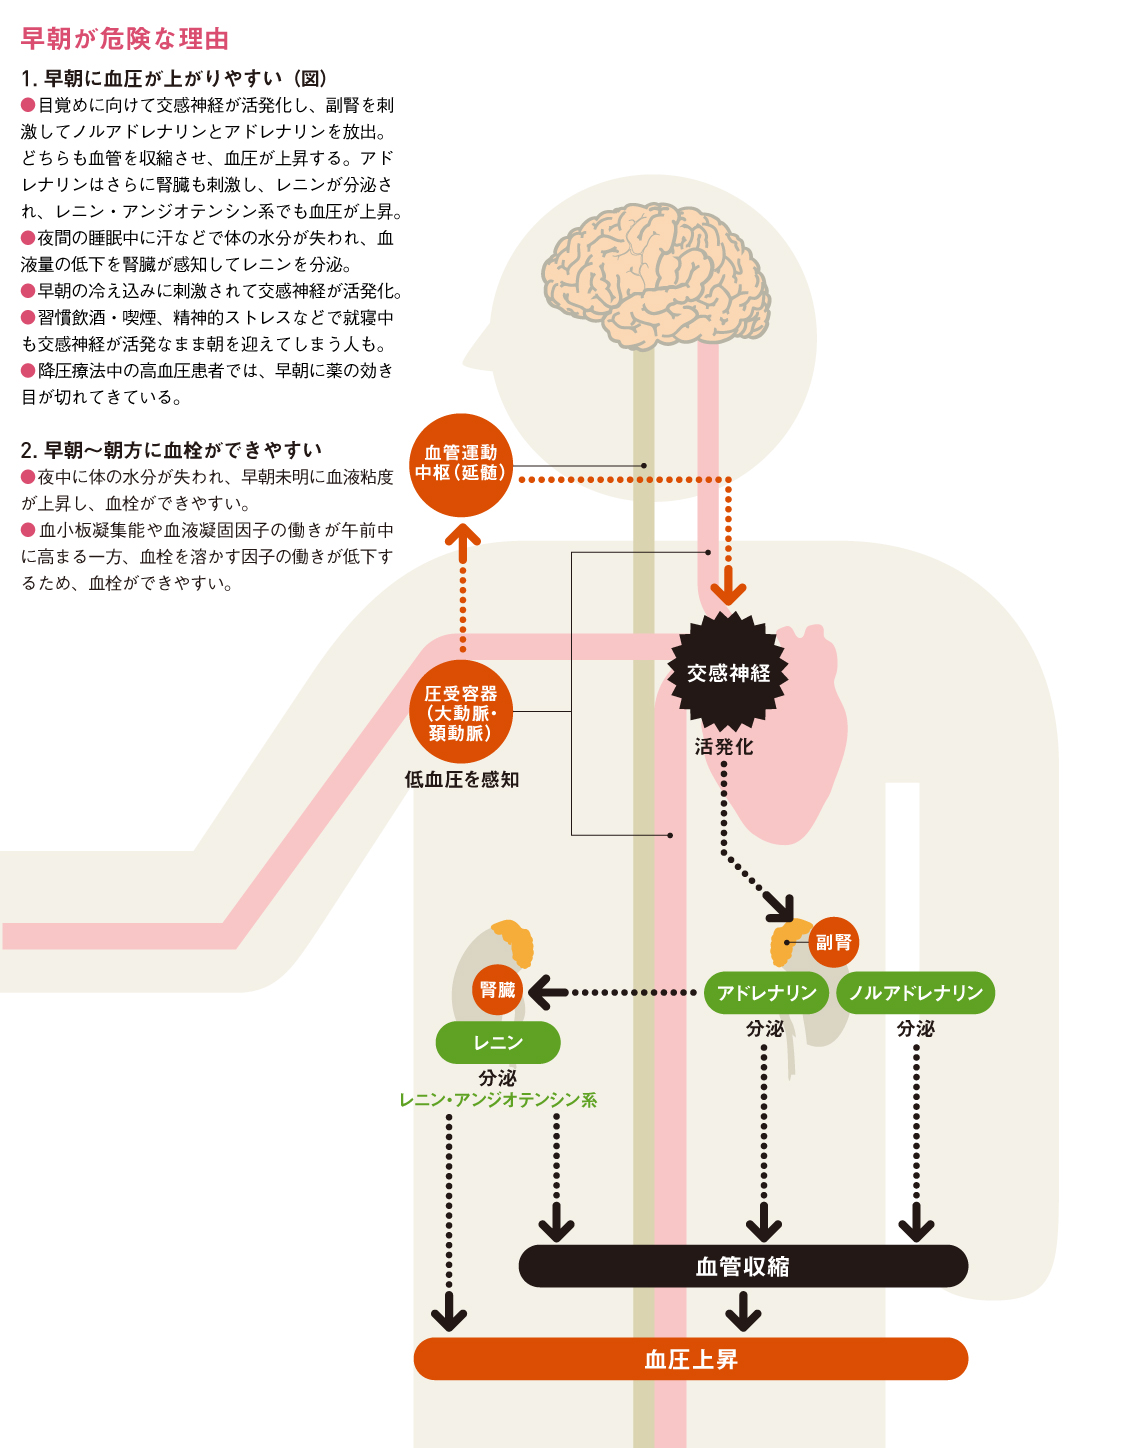 http://robust-health.jp/article/109_zuhan04.jpg